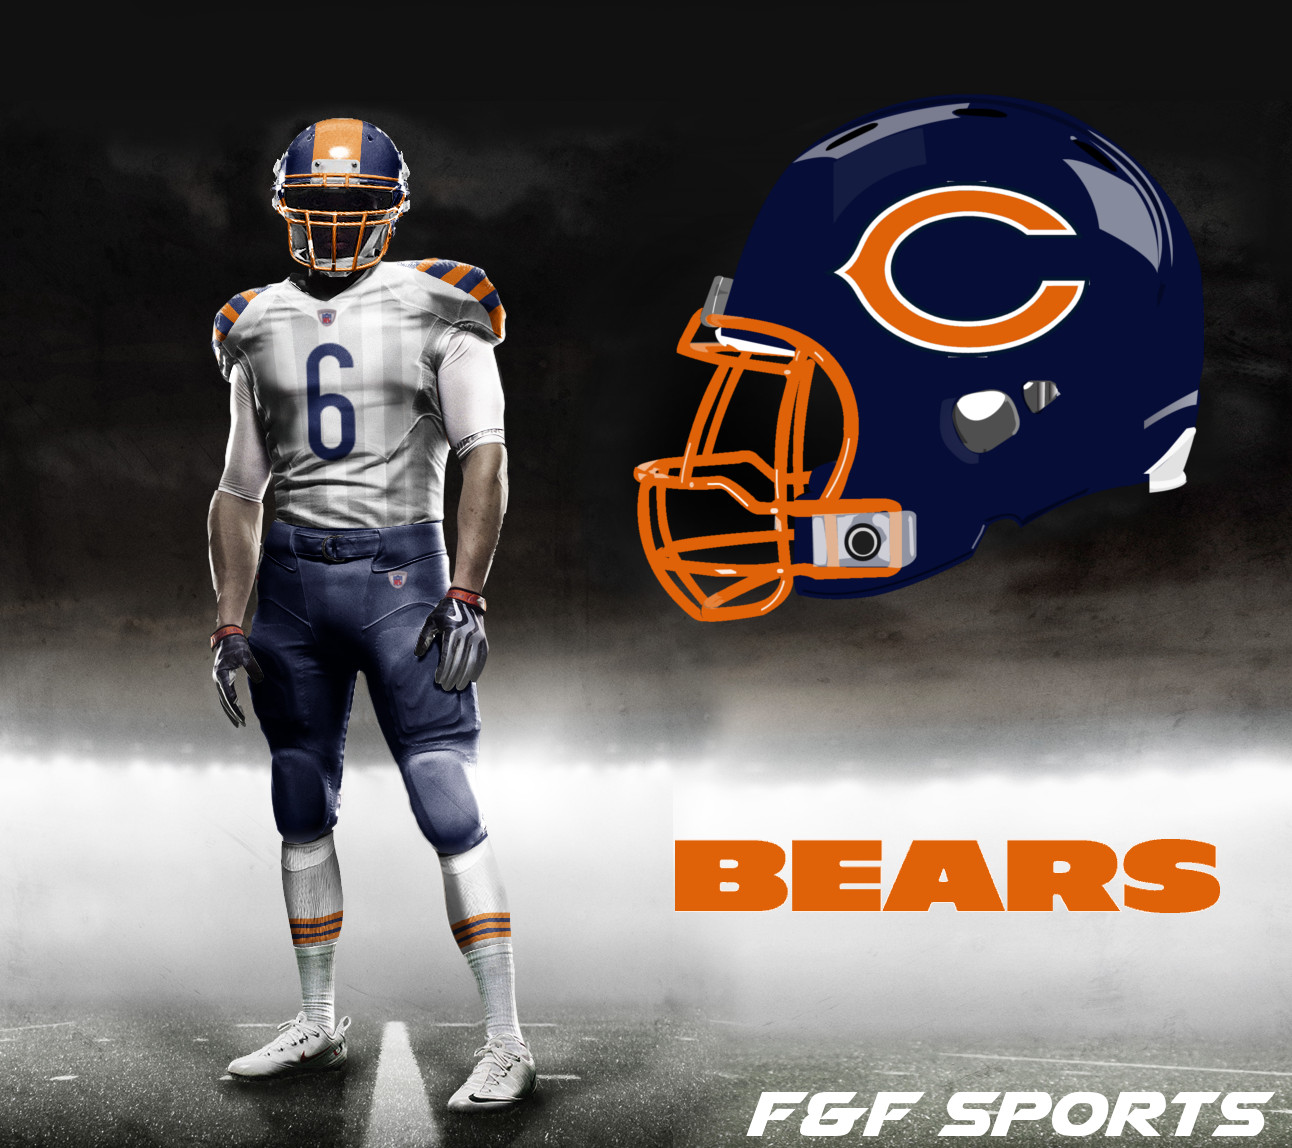 NFL Uniform Concept – F&F Sports